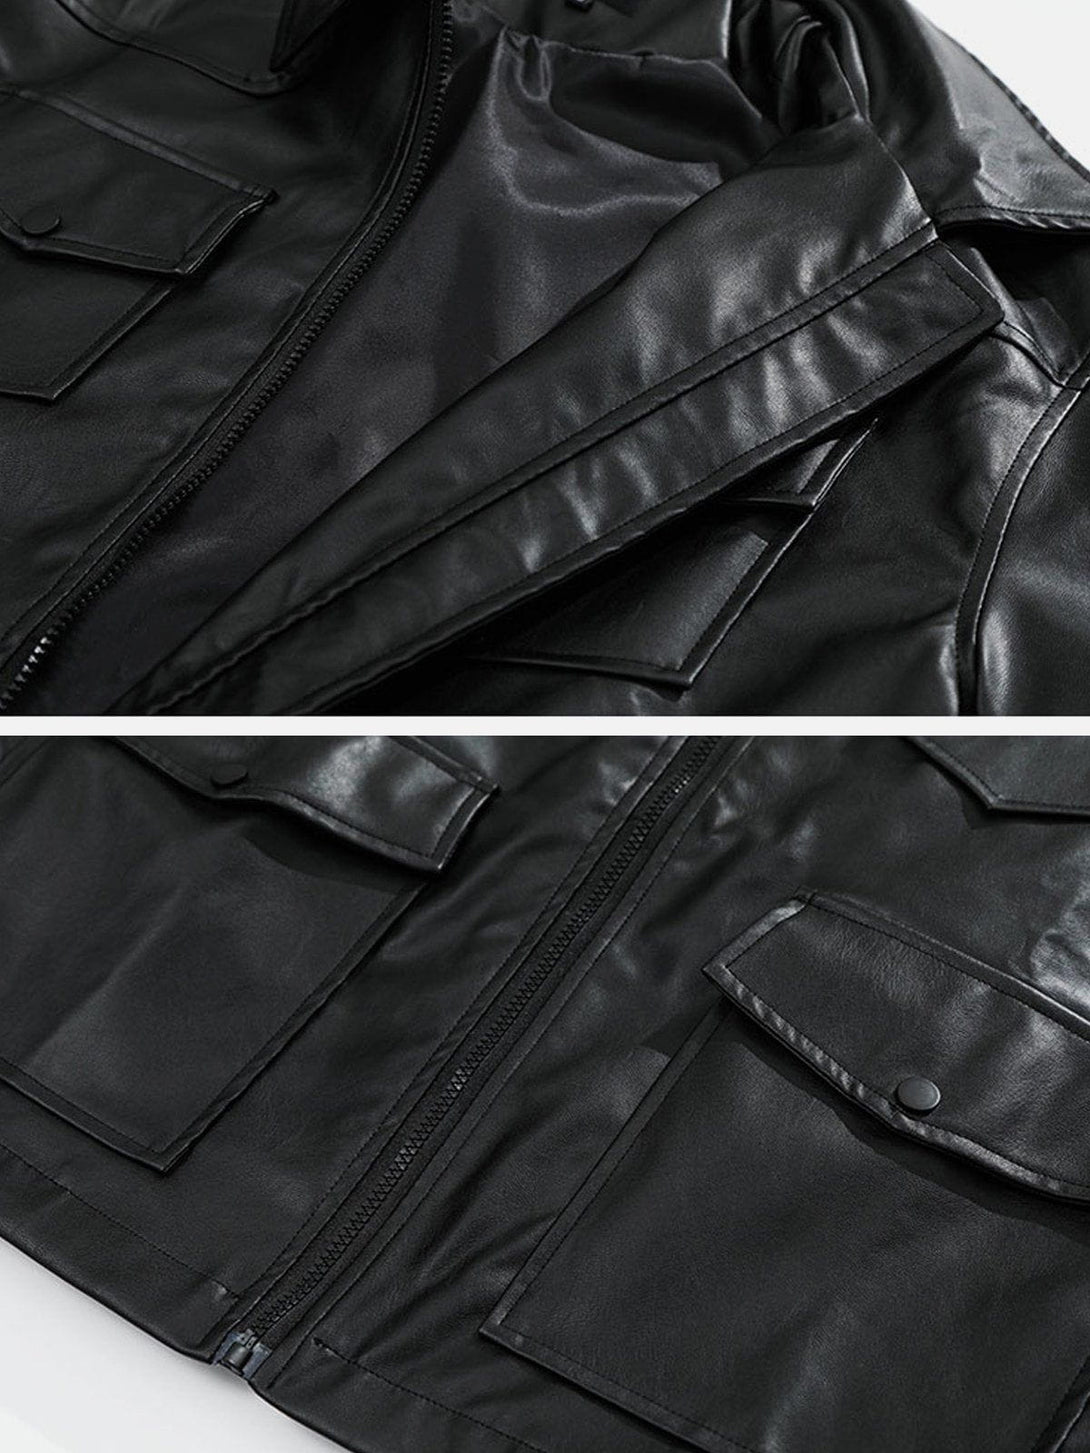 Levefly - Multi Pocket PU Jacket - Streetwear Fashion - levefly.com